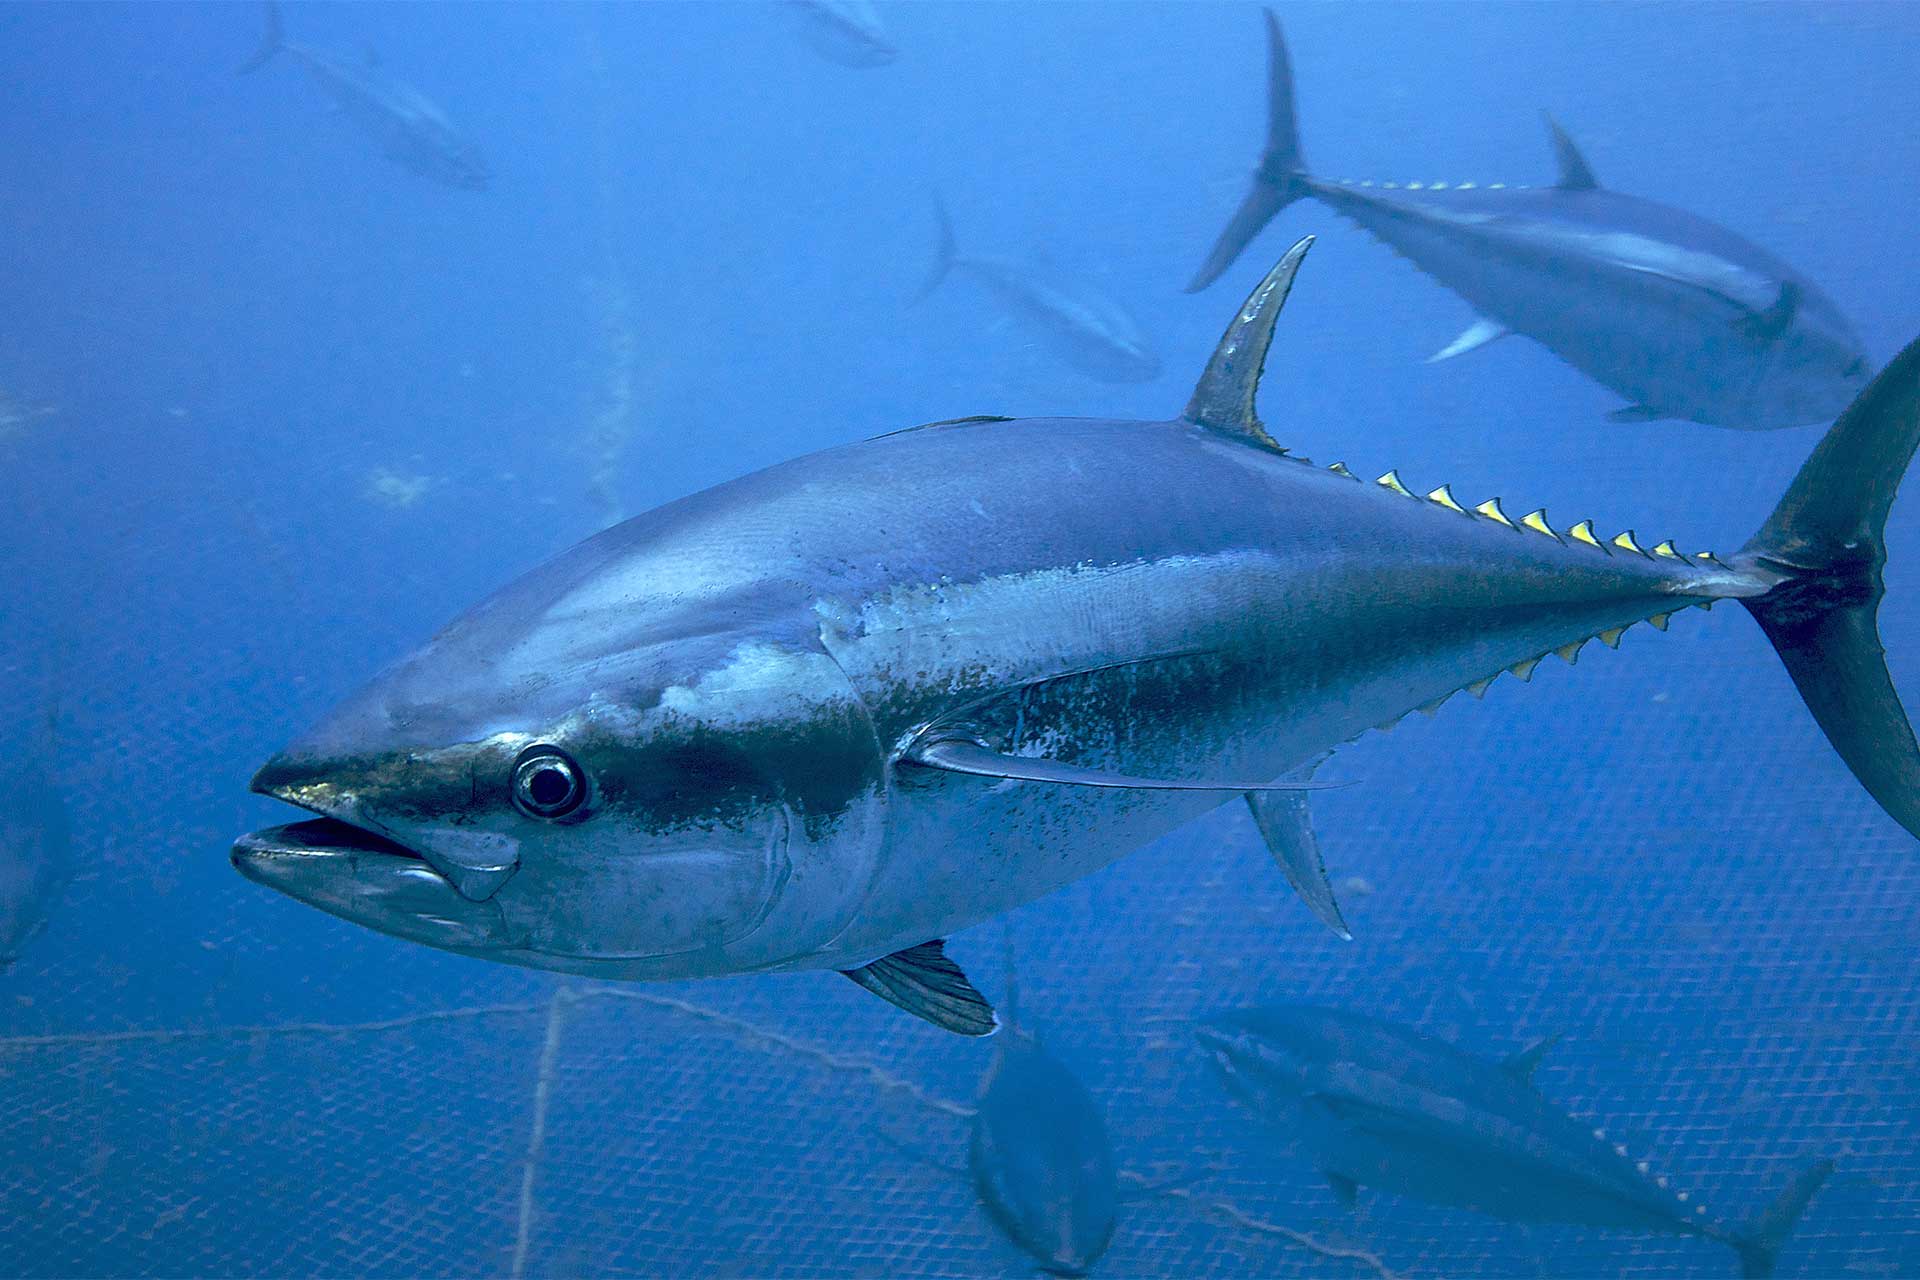 Bolton backs calls for ICCAT to establish new tuna harvest strategies